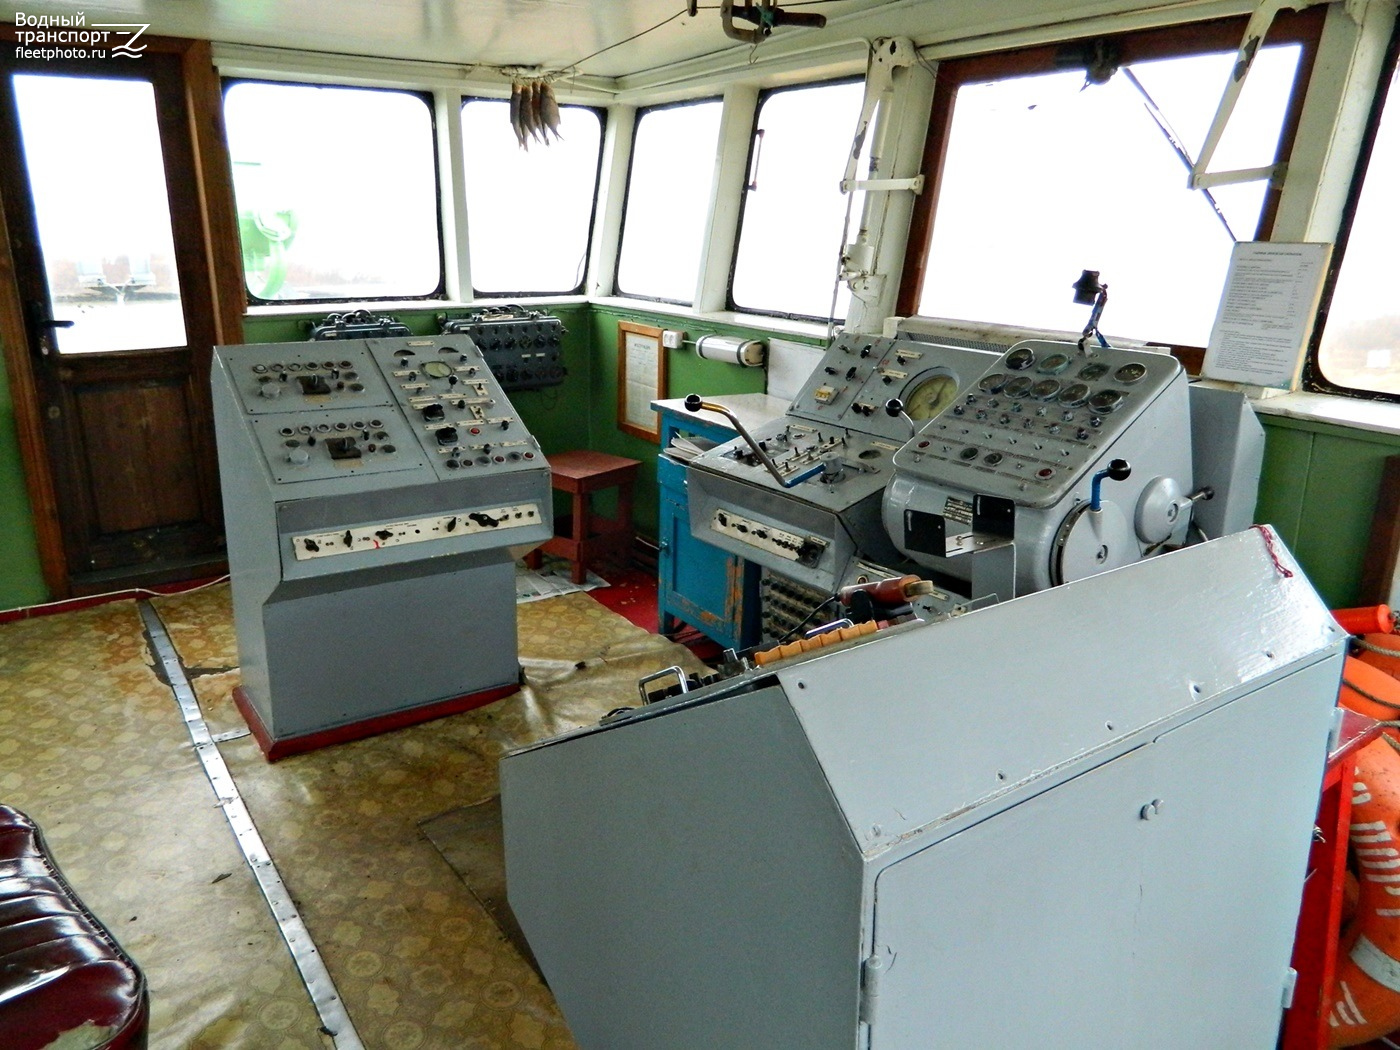 Ока-5. Wheelhouses, Control panels